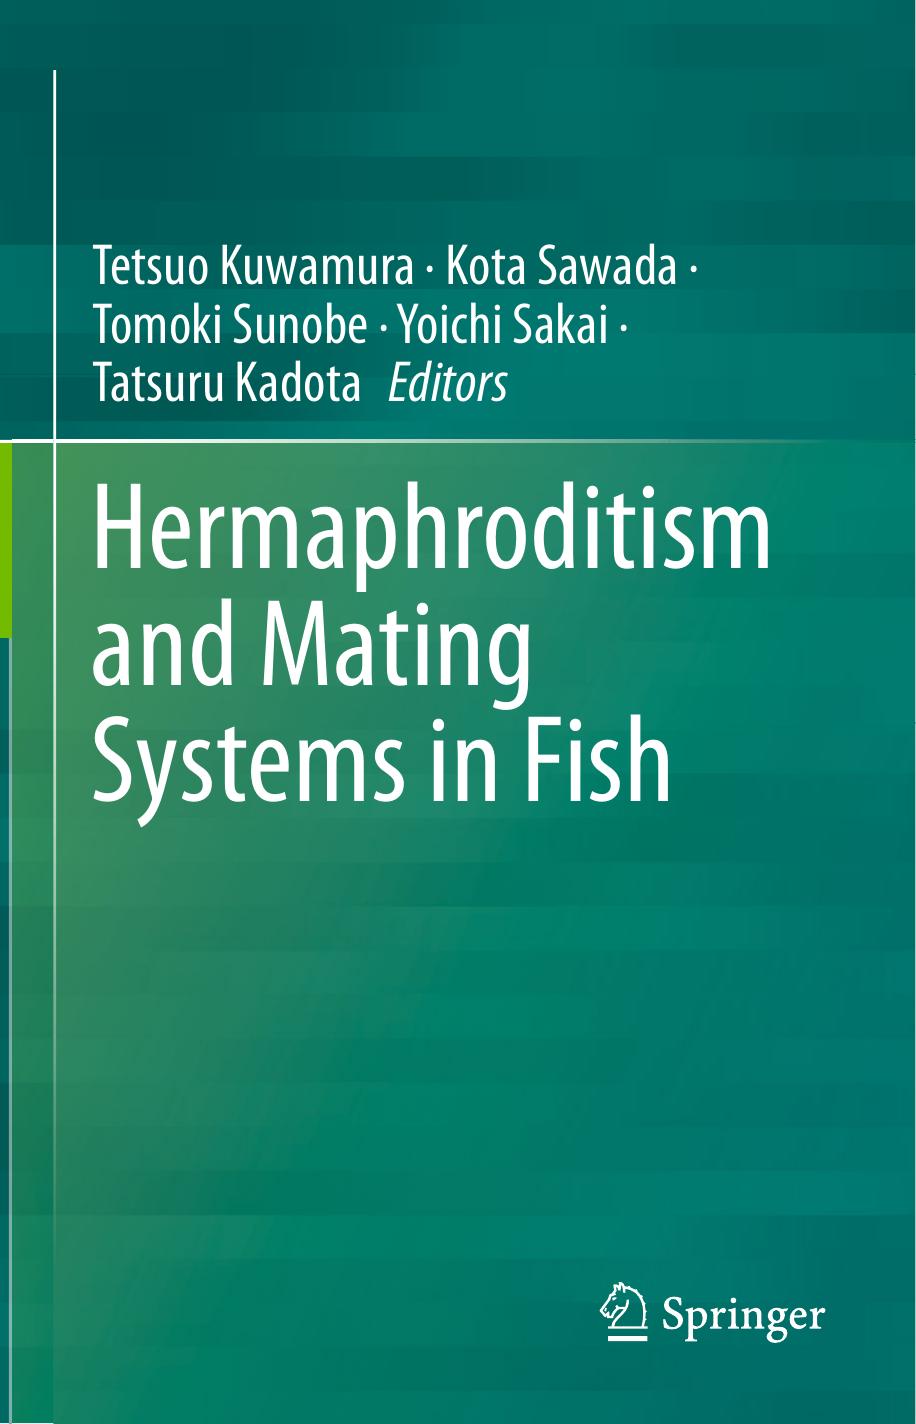 Hermaphroditism and Mating Systems in Fish by Tetsuo Kuwamura Kota Sawada Tomoki Sunobe Yoichi Sakai Tatsuru Kadota